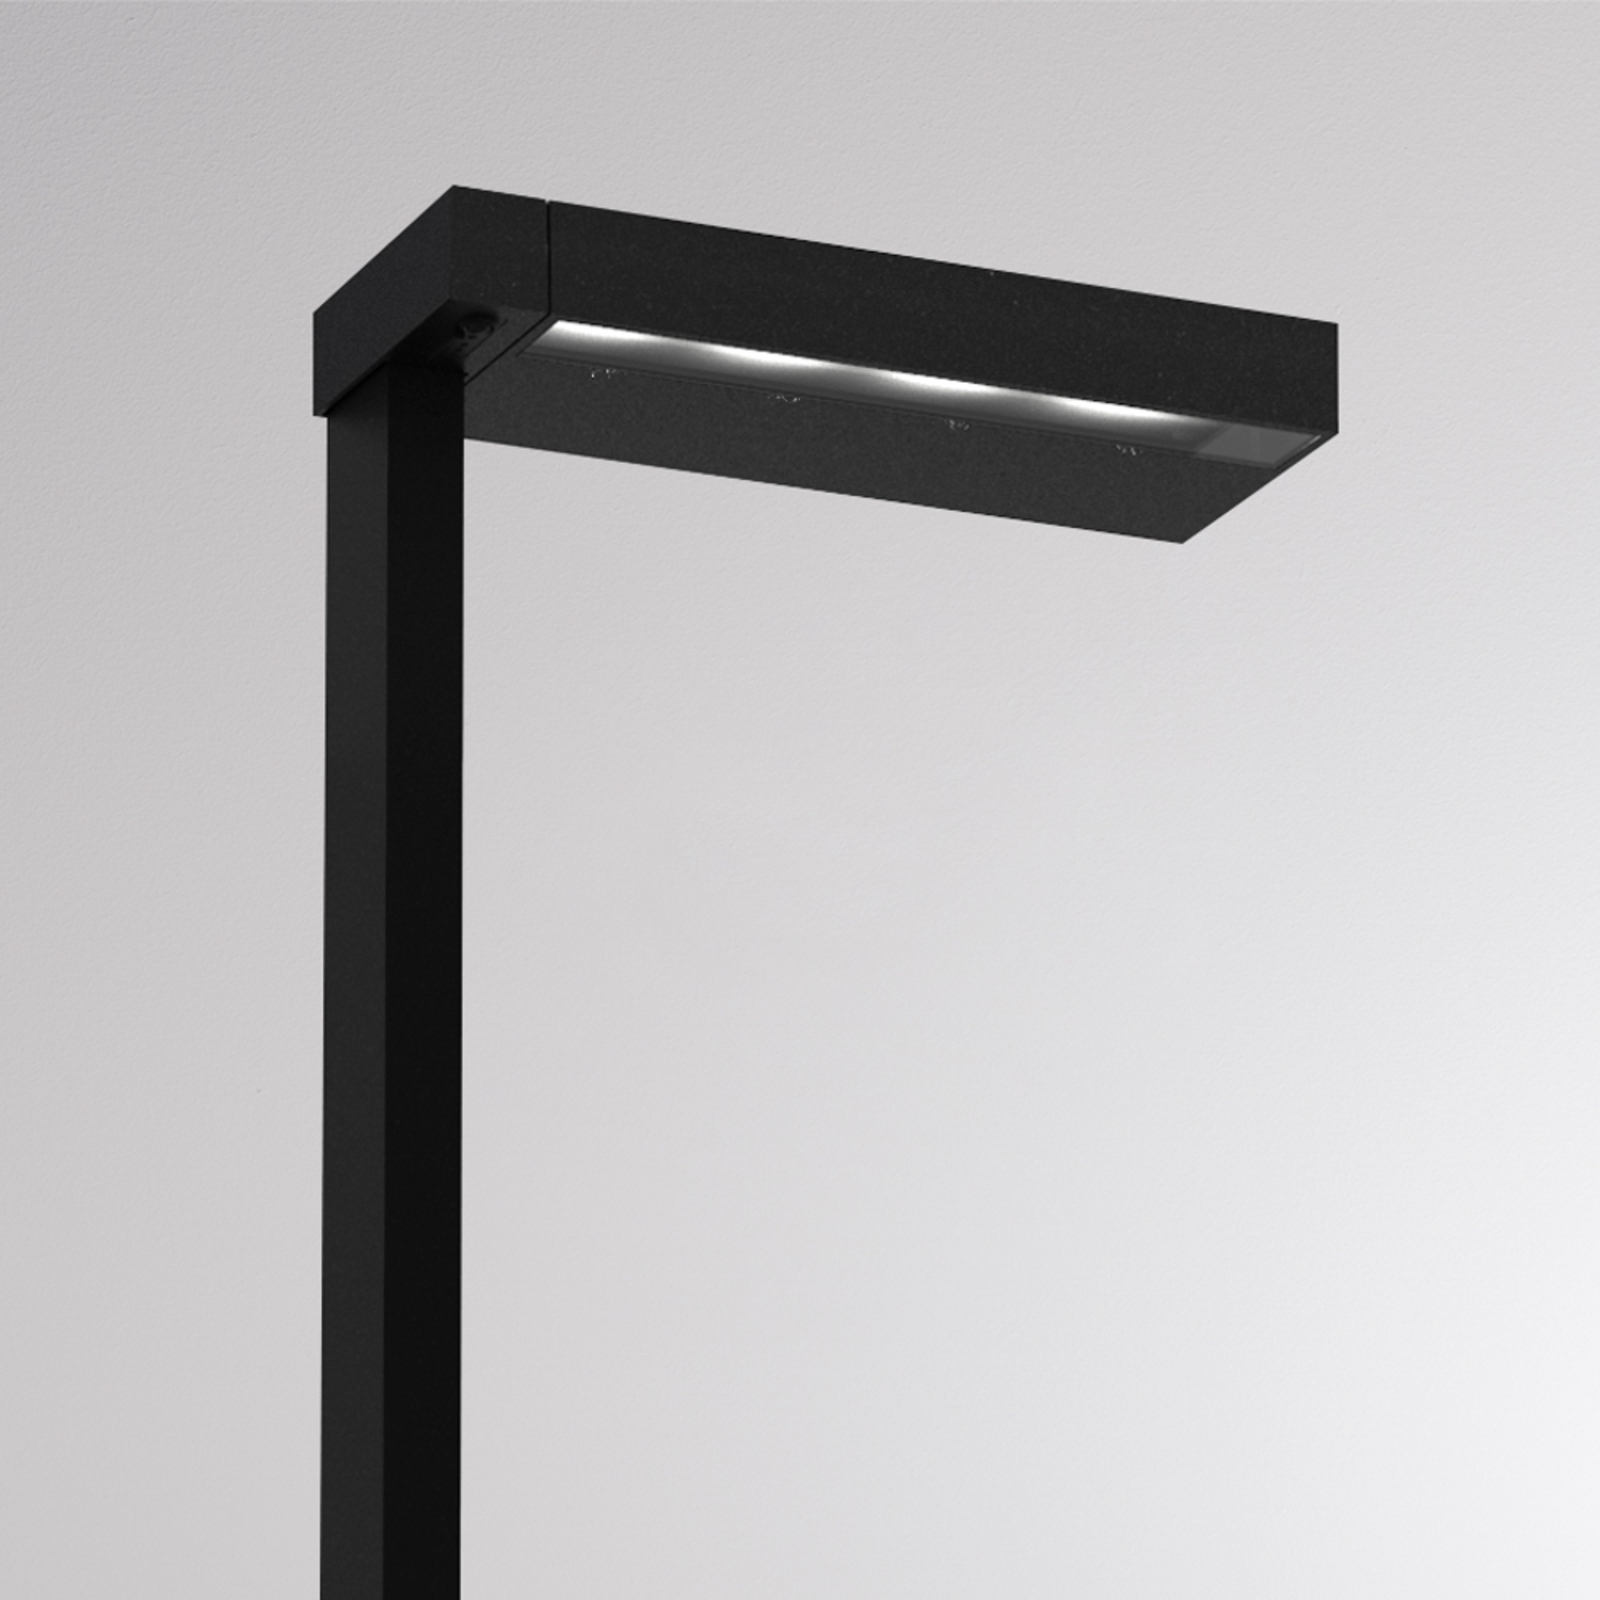 Molto Luce Concept Right F floor lamp sensor black